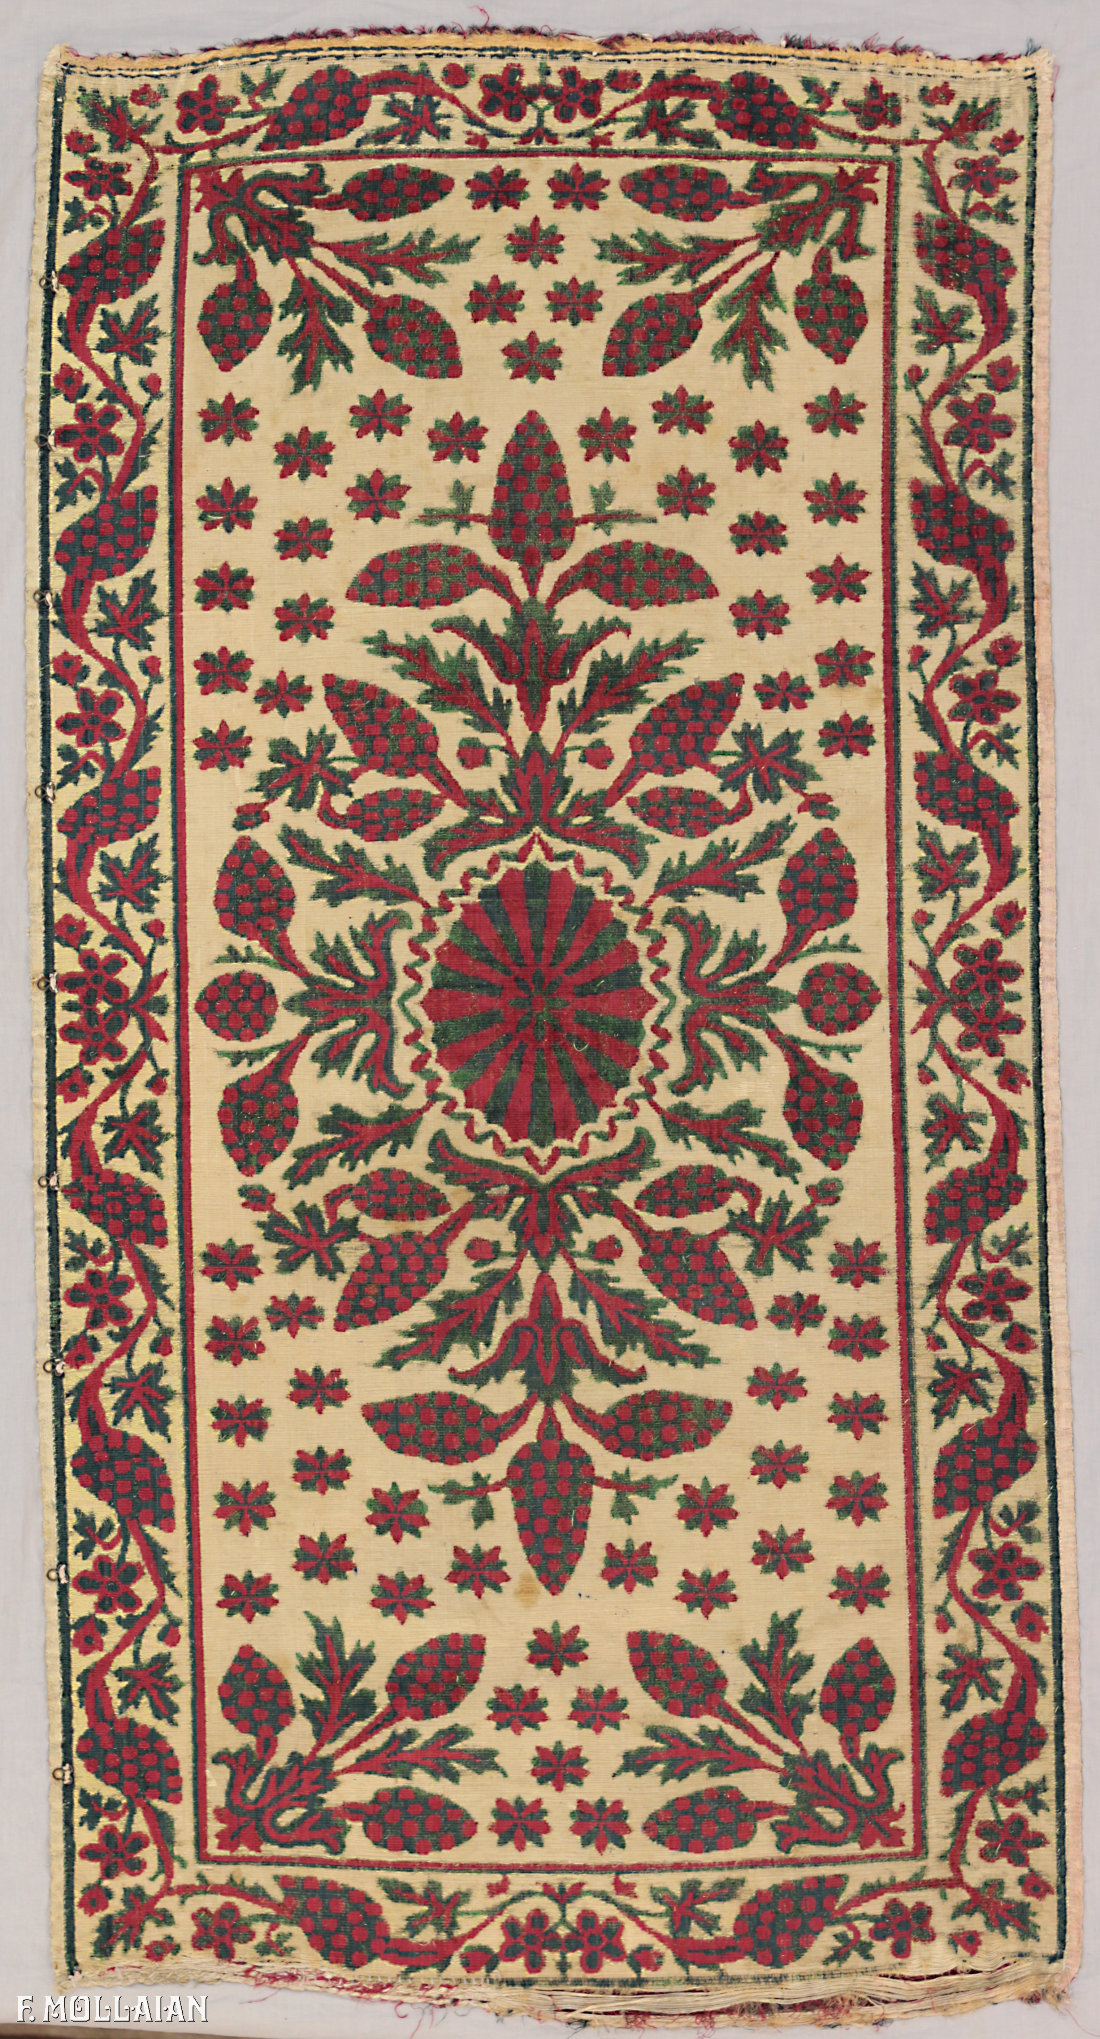 Têxtil Turco Antigo Ottoman (Velvet) n°:68495009